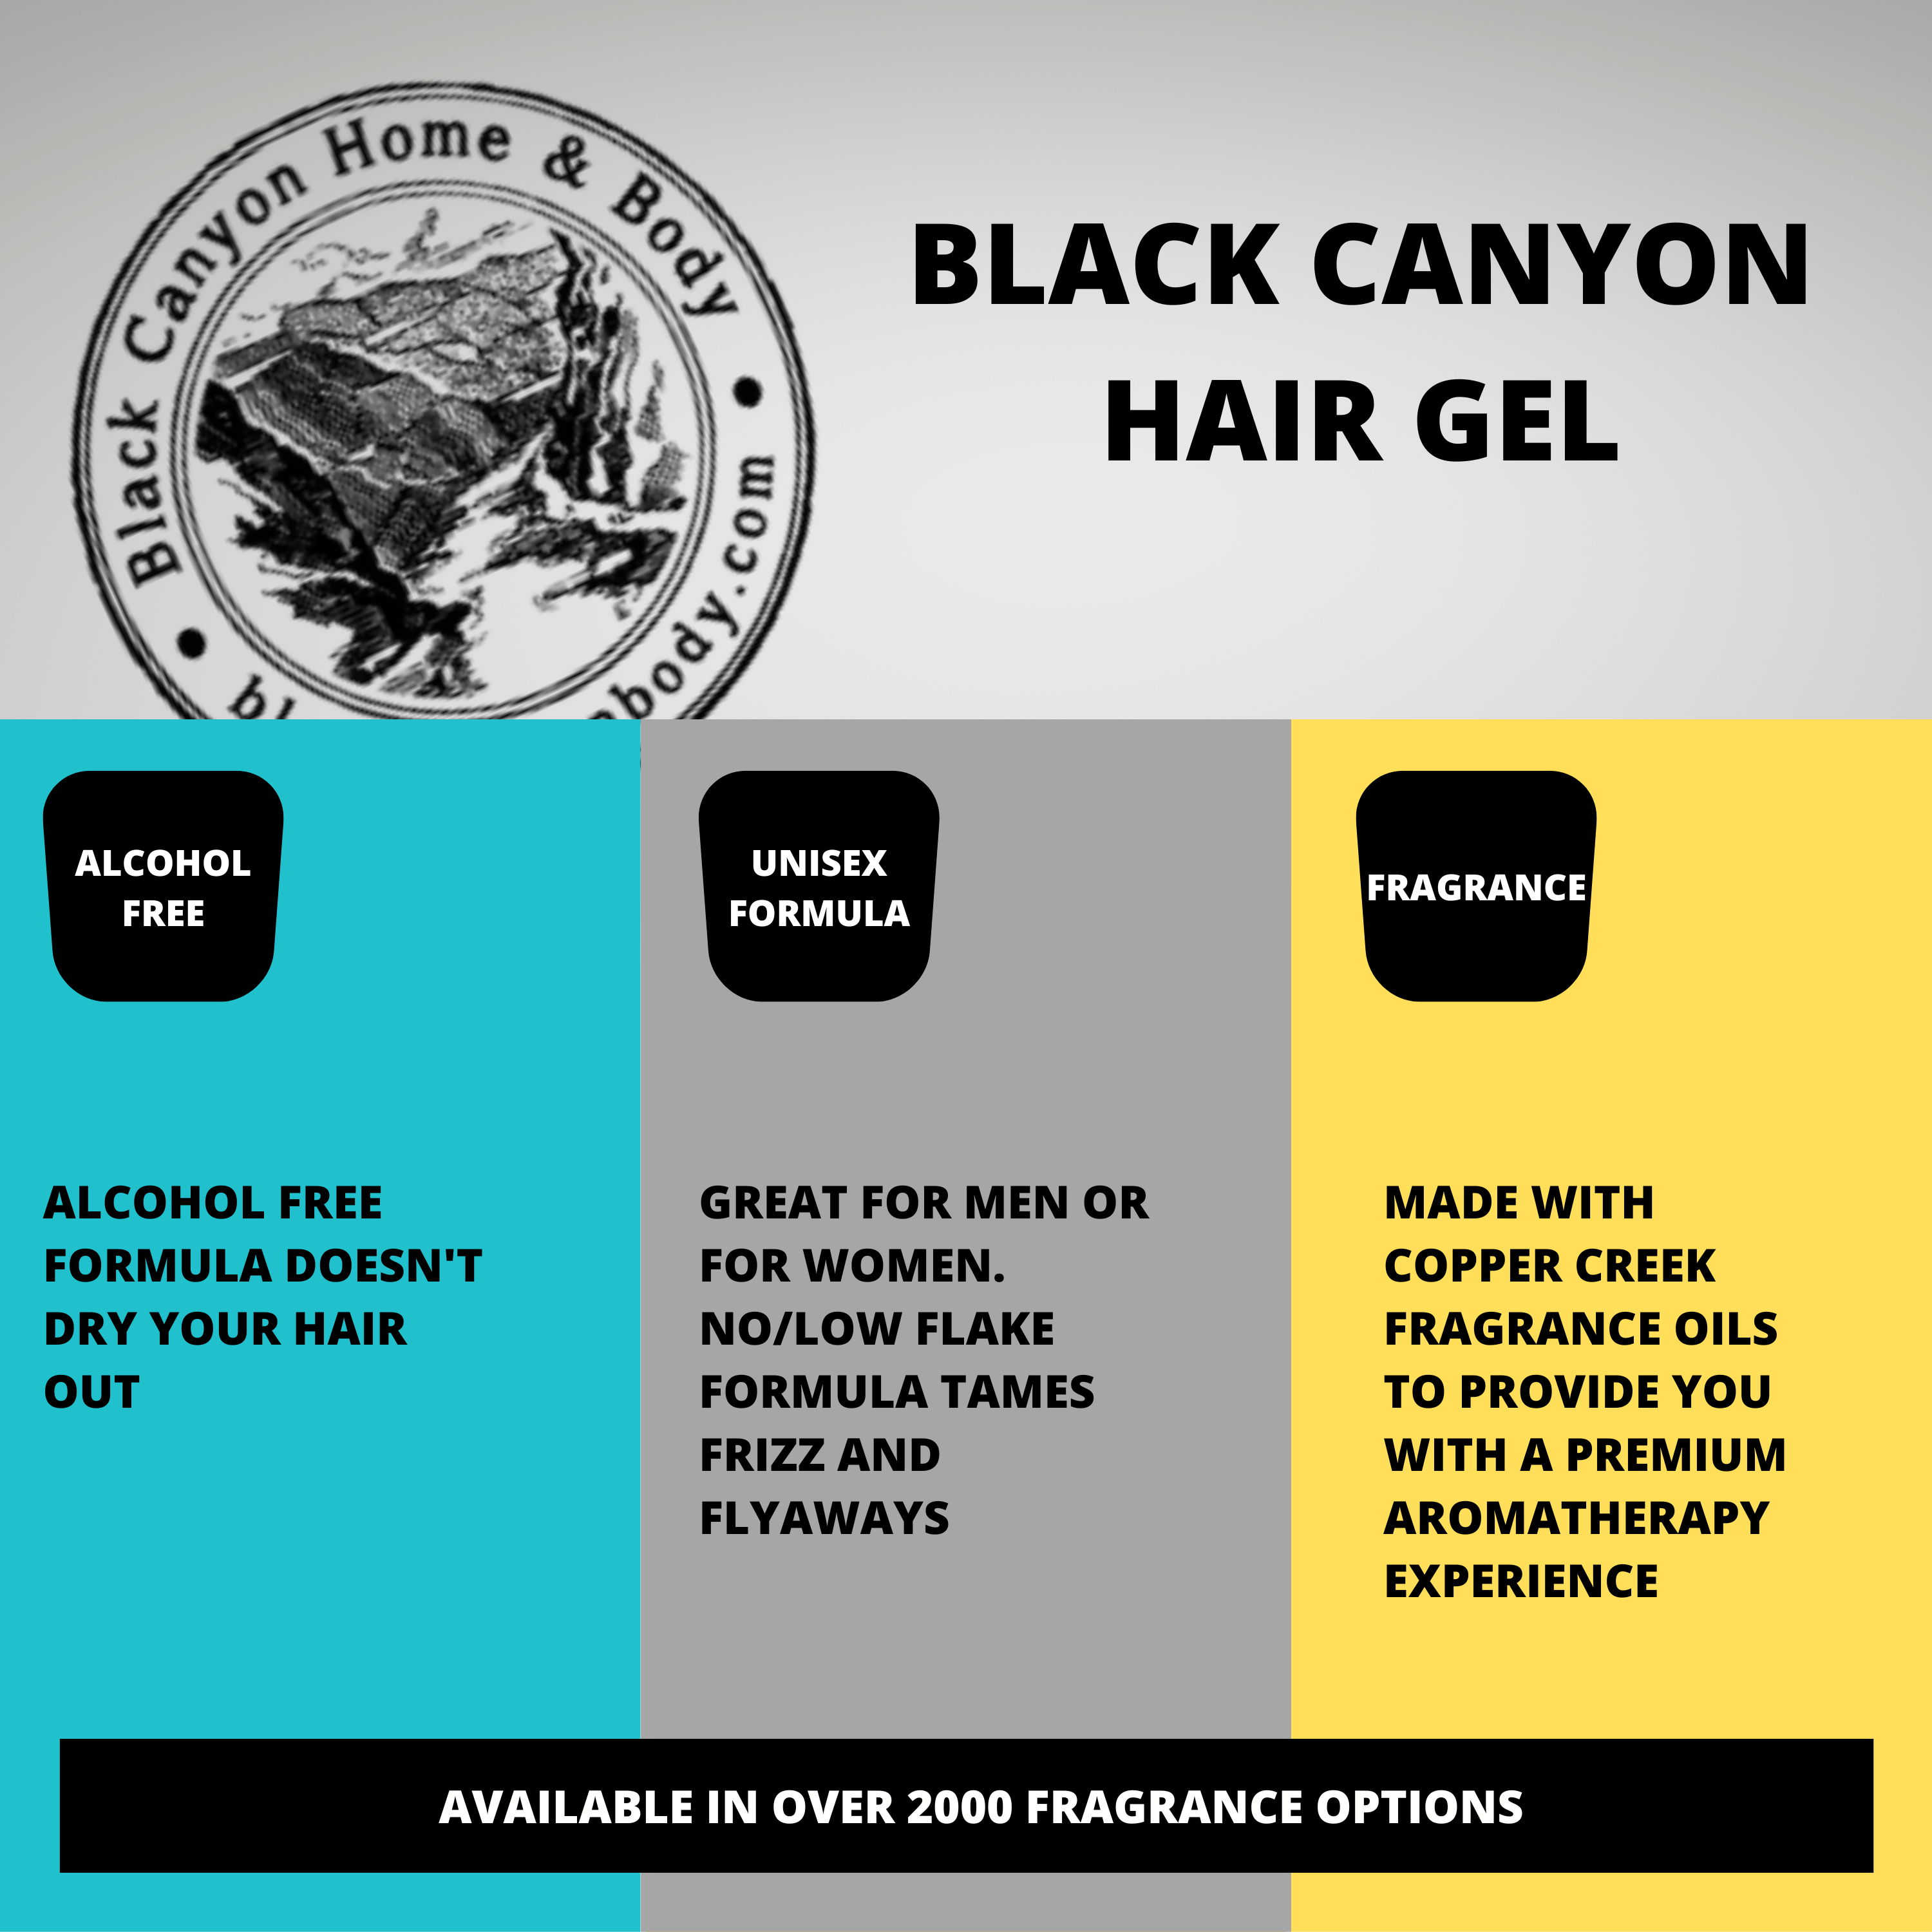 Black Canyon Wild Blackberry Vanilla Scented Hair Gel